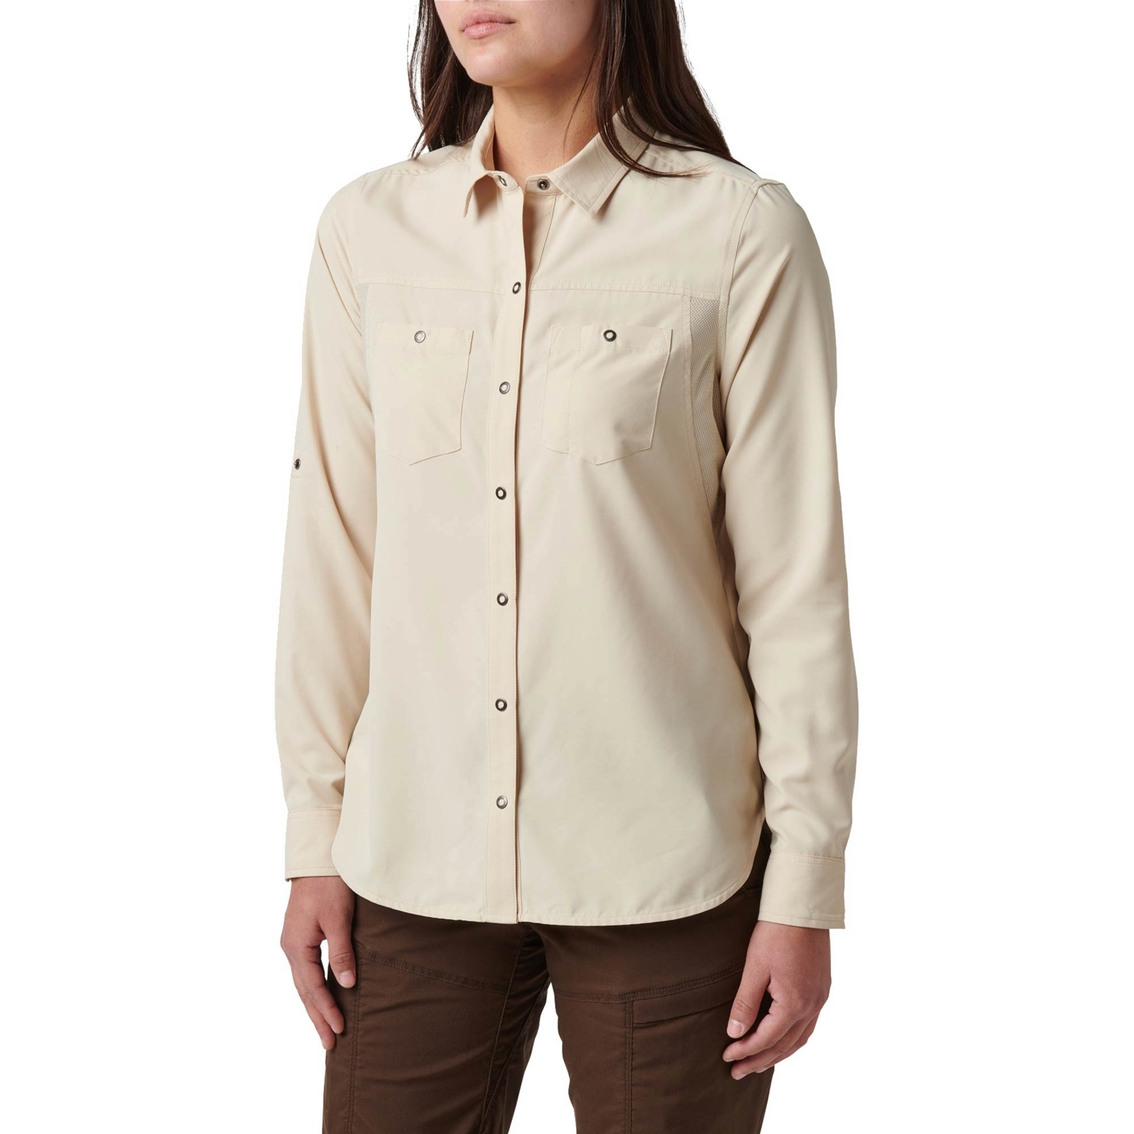 5.11 Marksman Button Up Shirt - Image 3 of 4